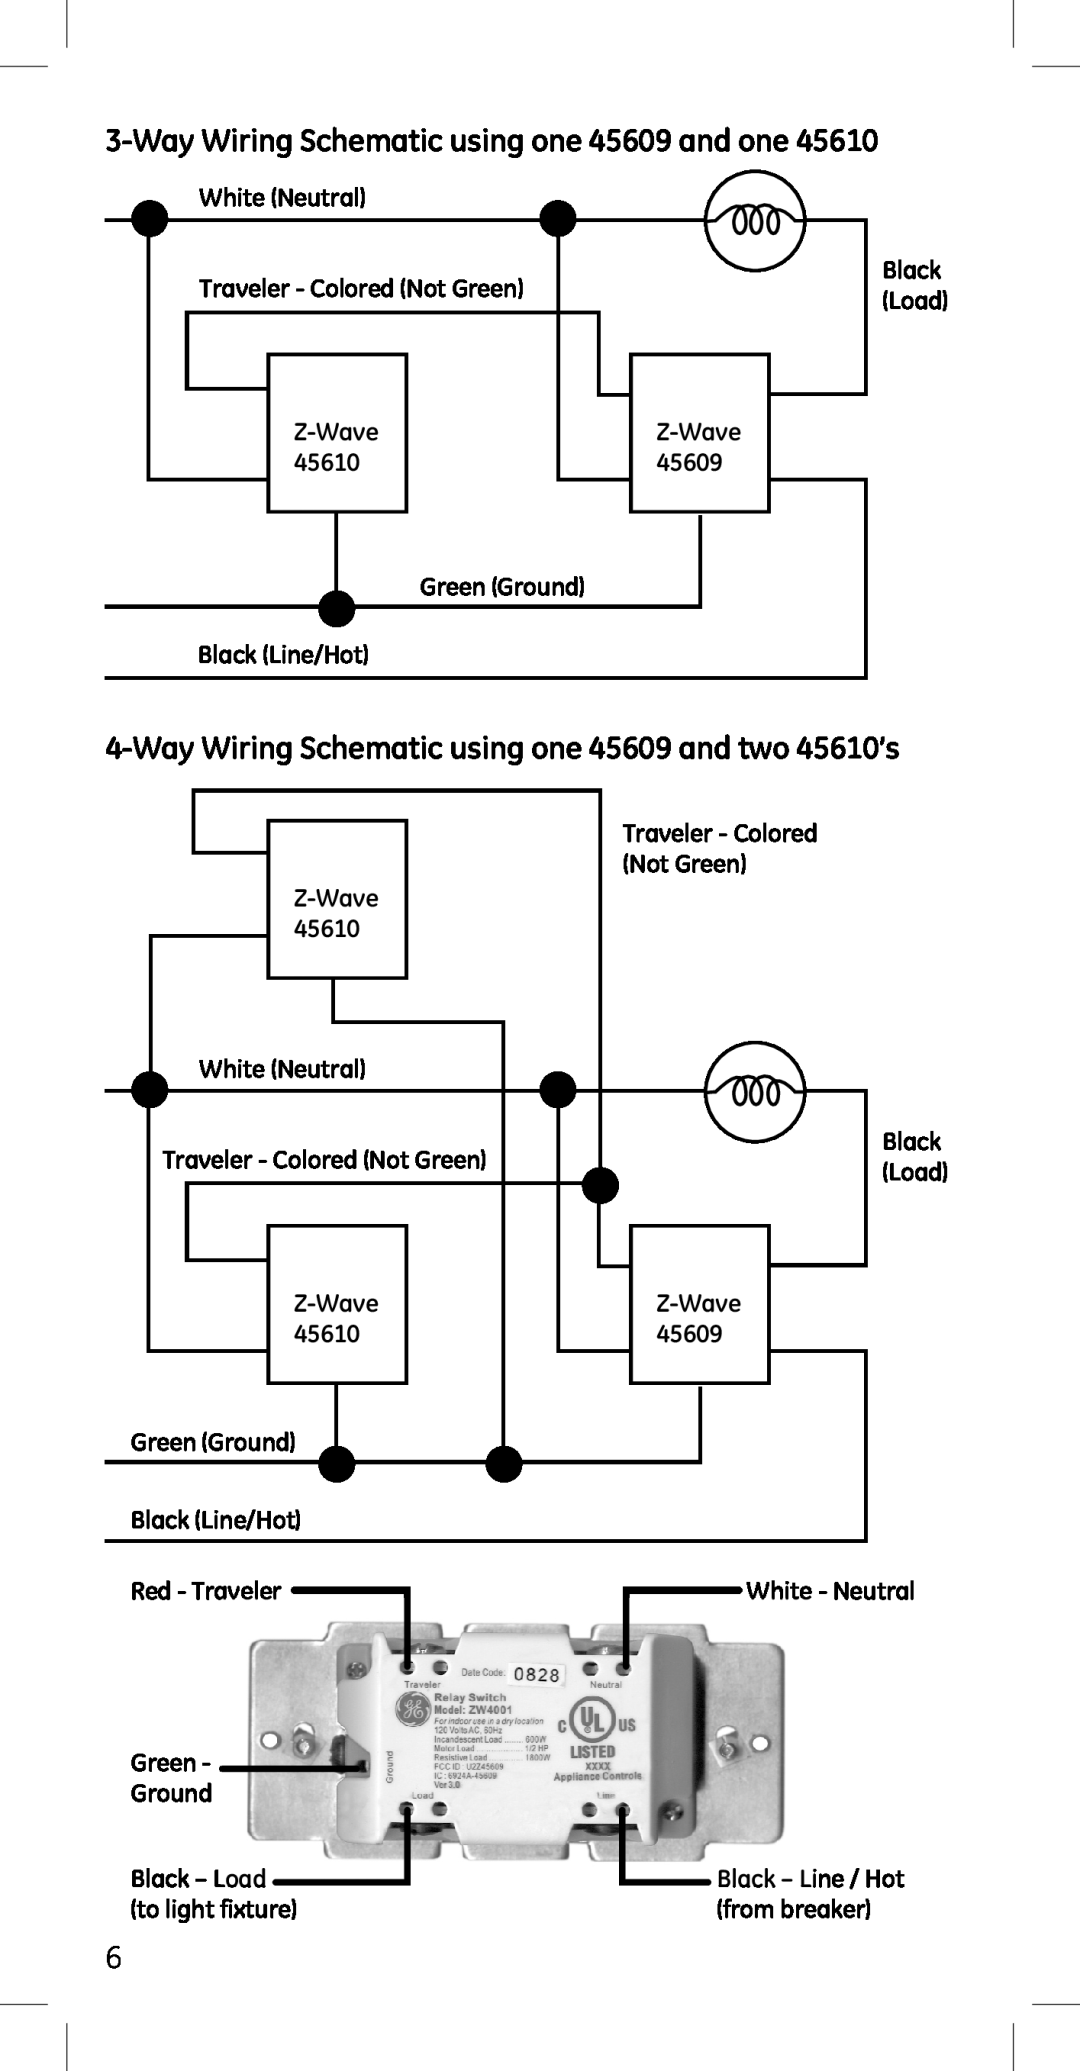 Jasco manual WayWiring Schematic using one 45609 and one 